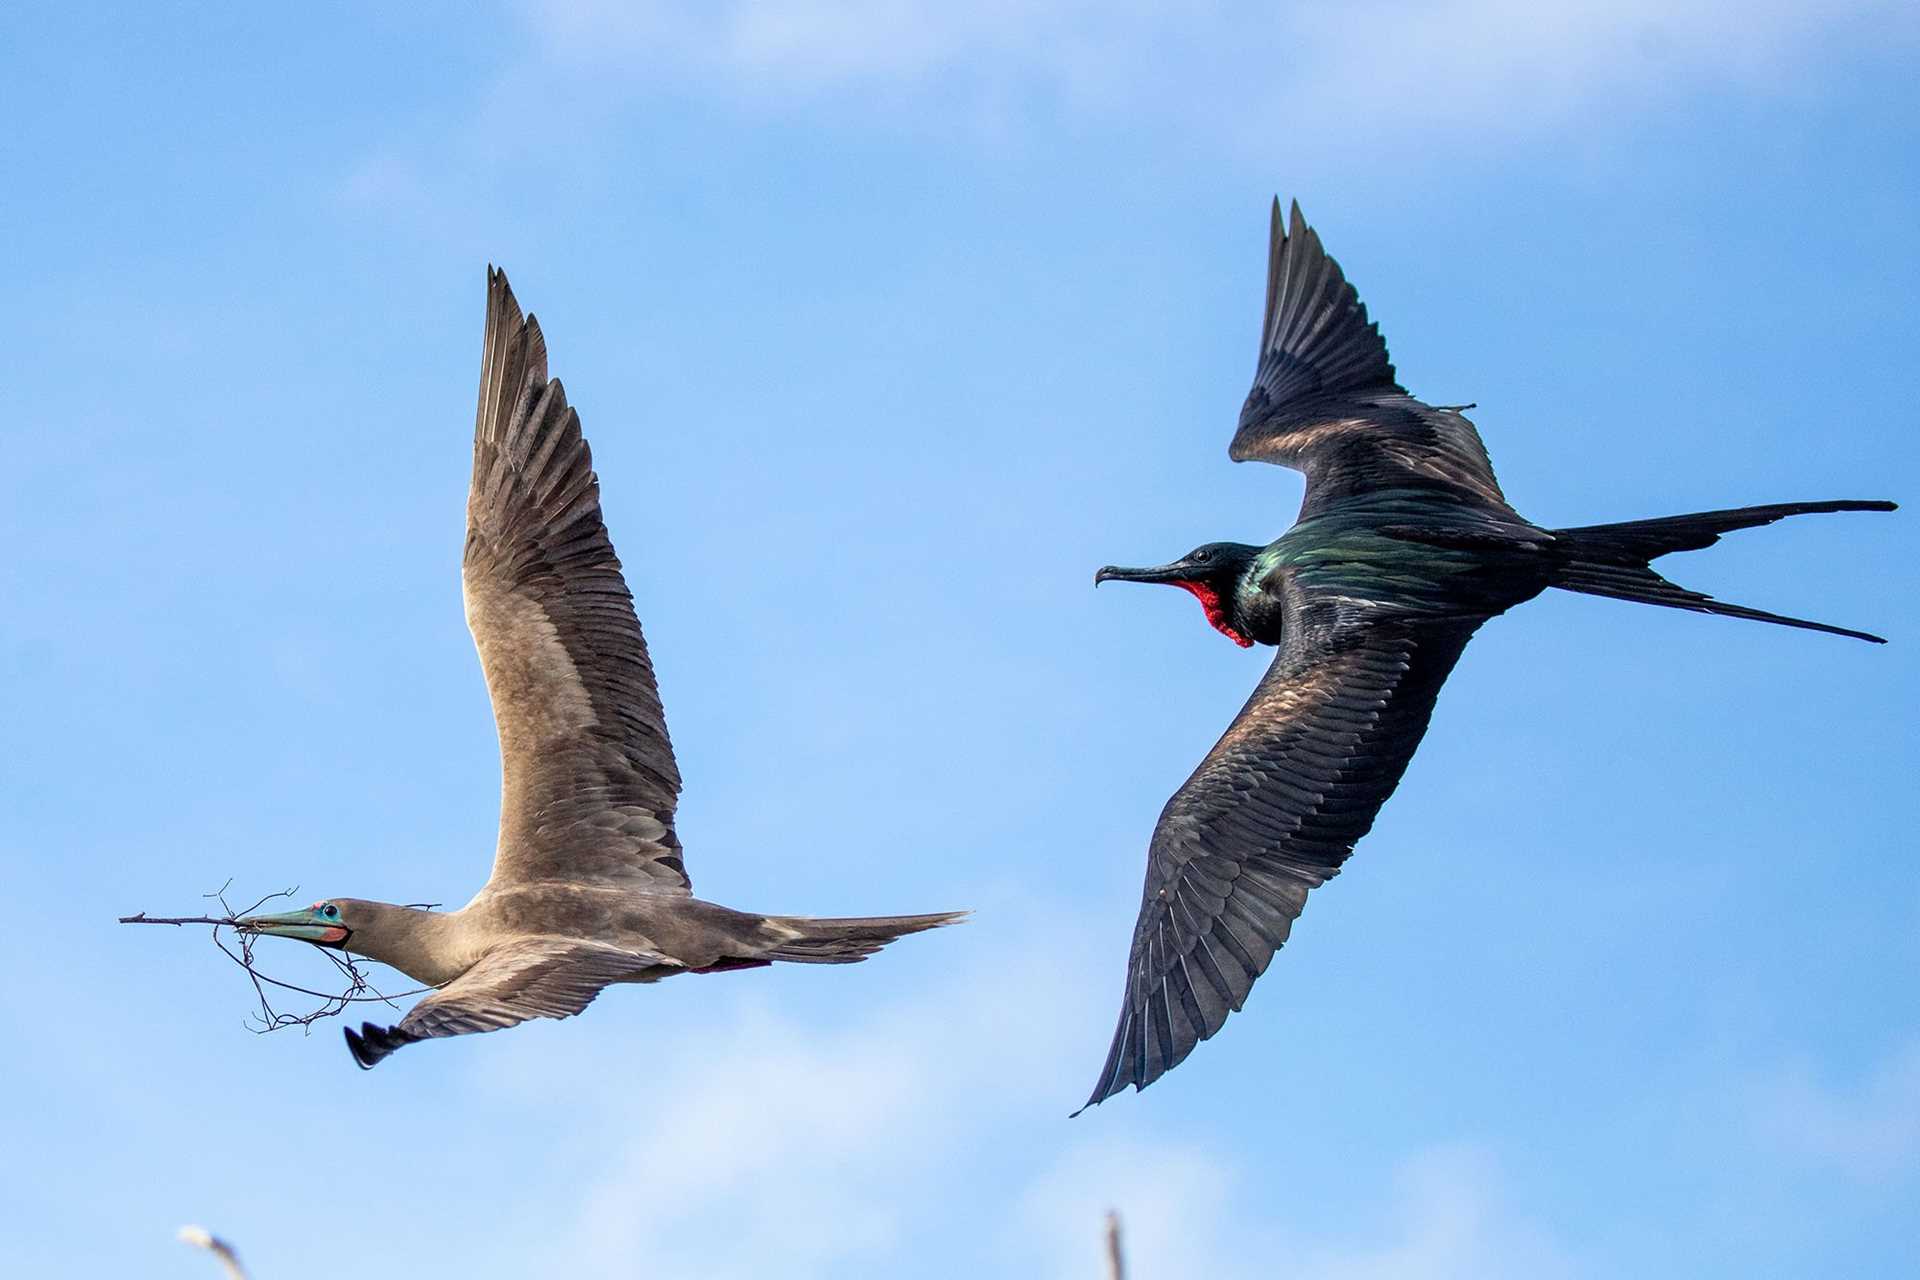 frigatebird and booby in flight